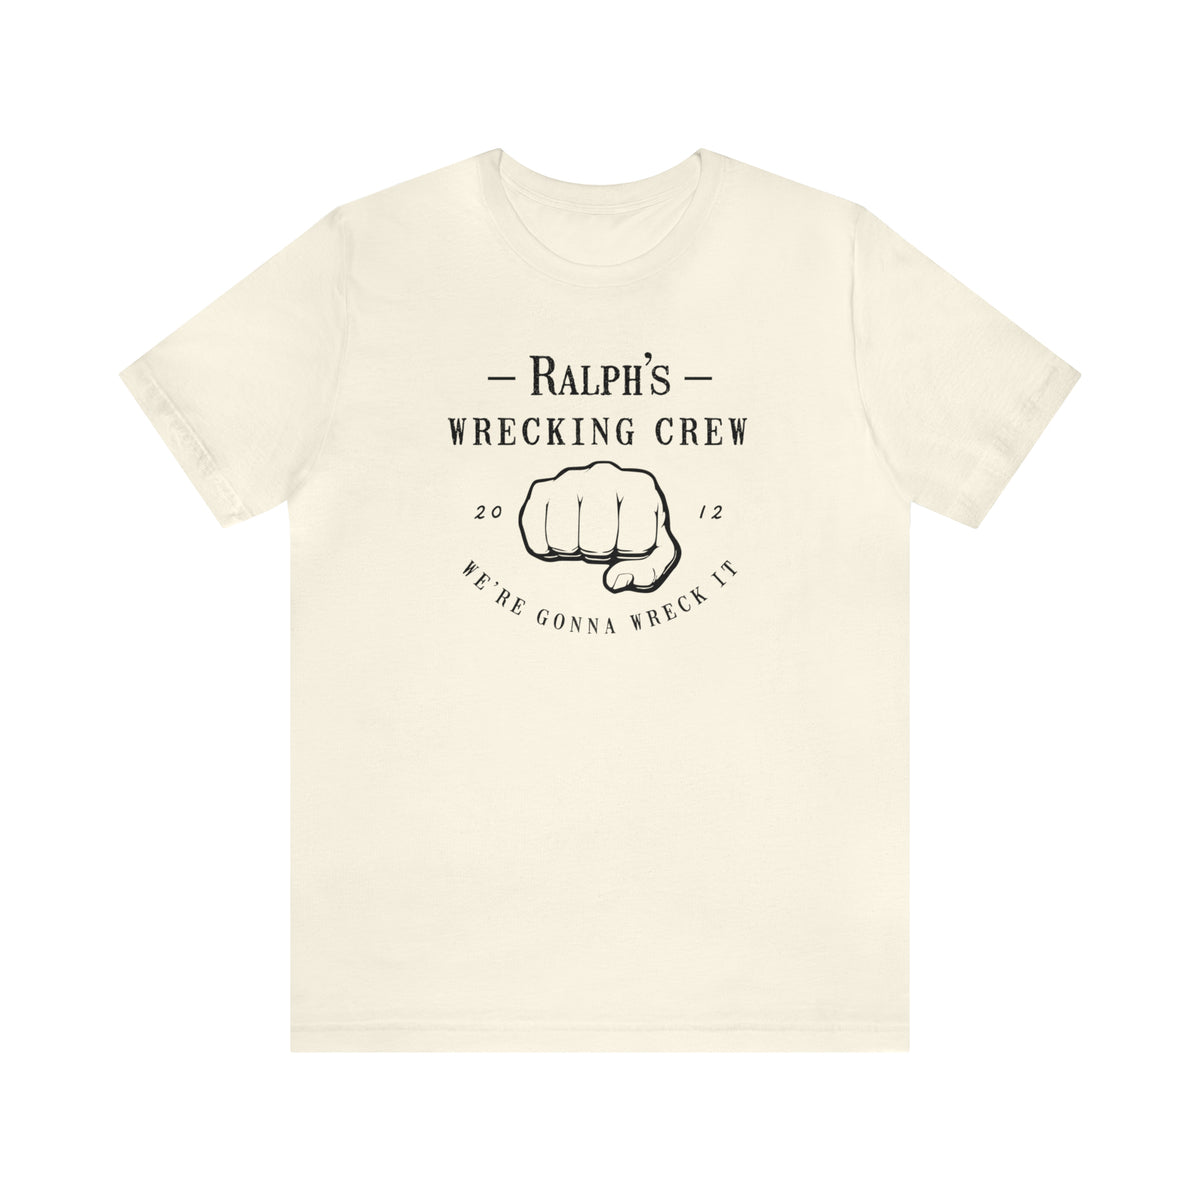 Ralph’s Wrecking Crew Bella Canvas Unisex Jersey Short Sleeve Tee